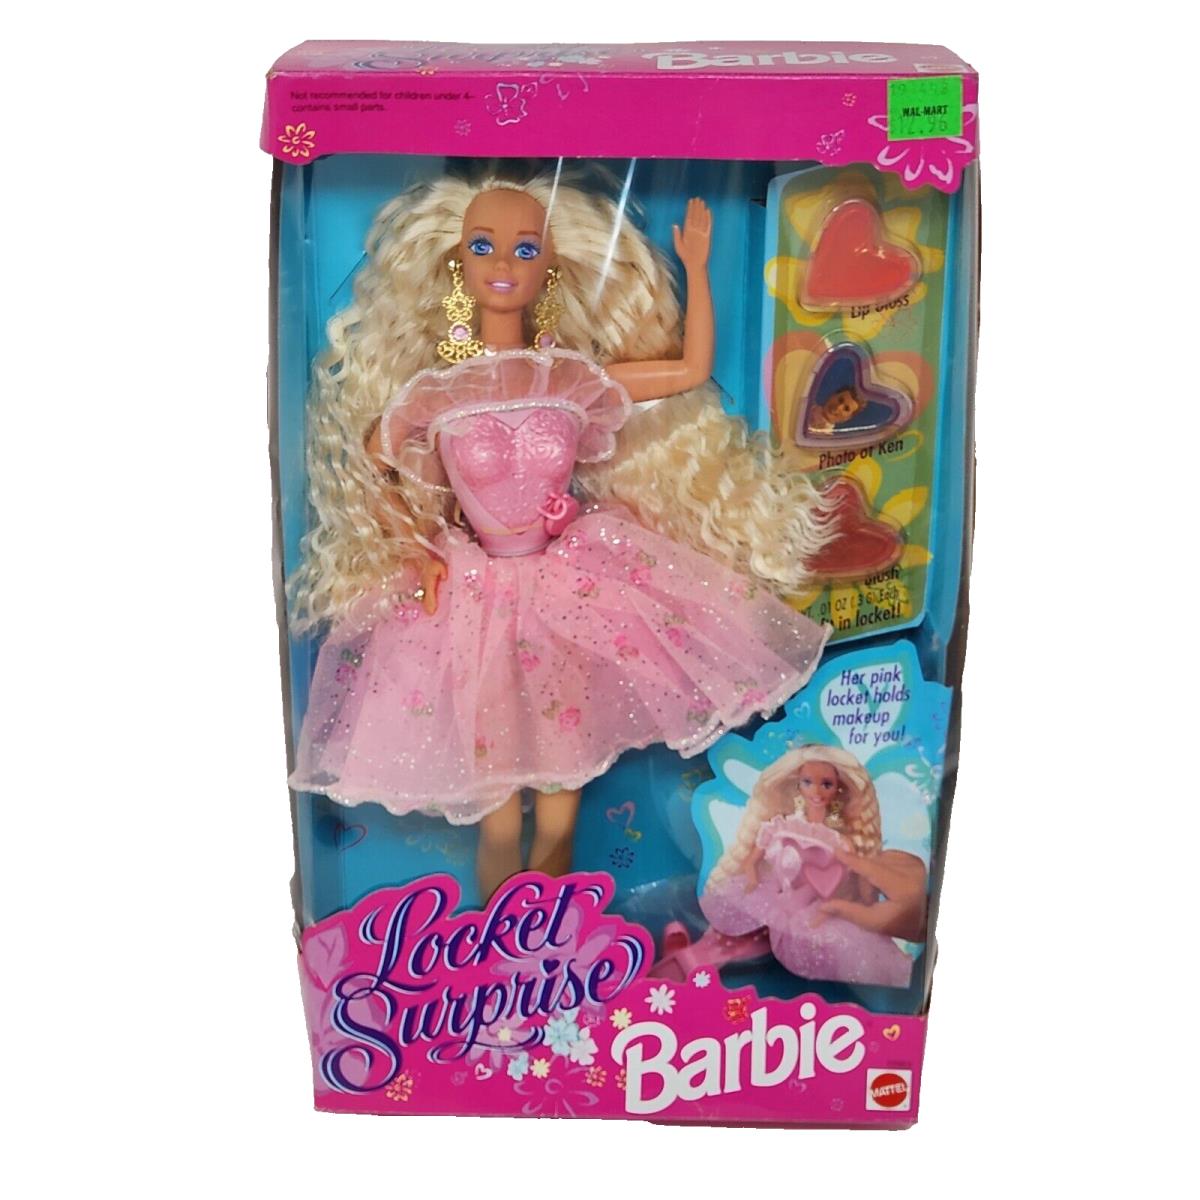 Vintage 1993 Locket Surprise Barbie Doll IN Box Box 10963